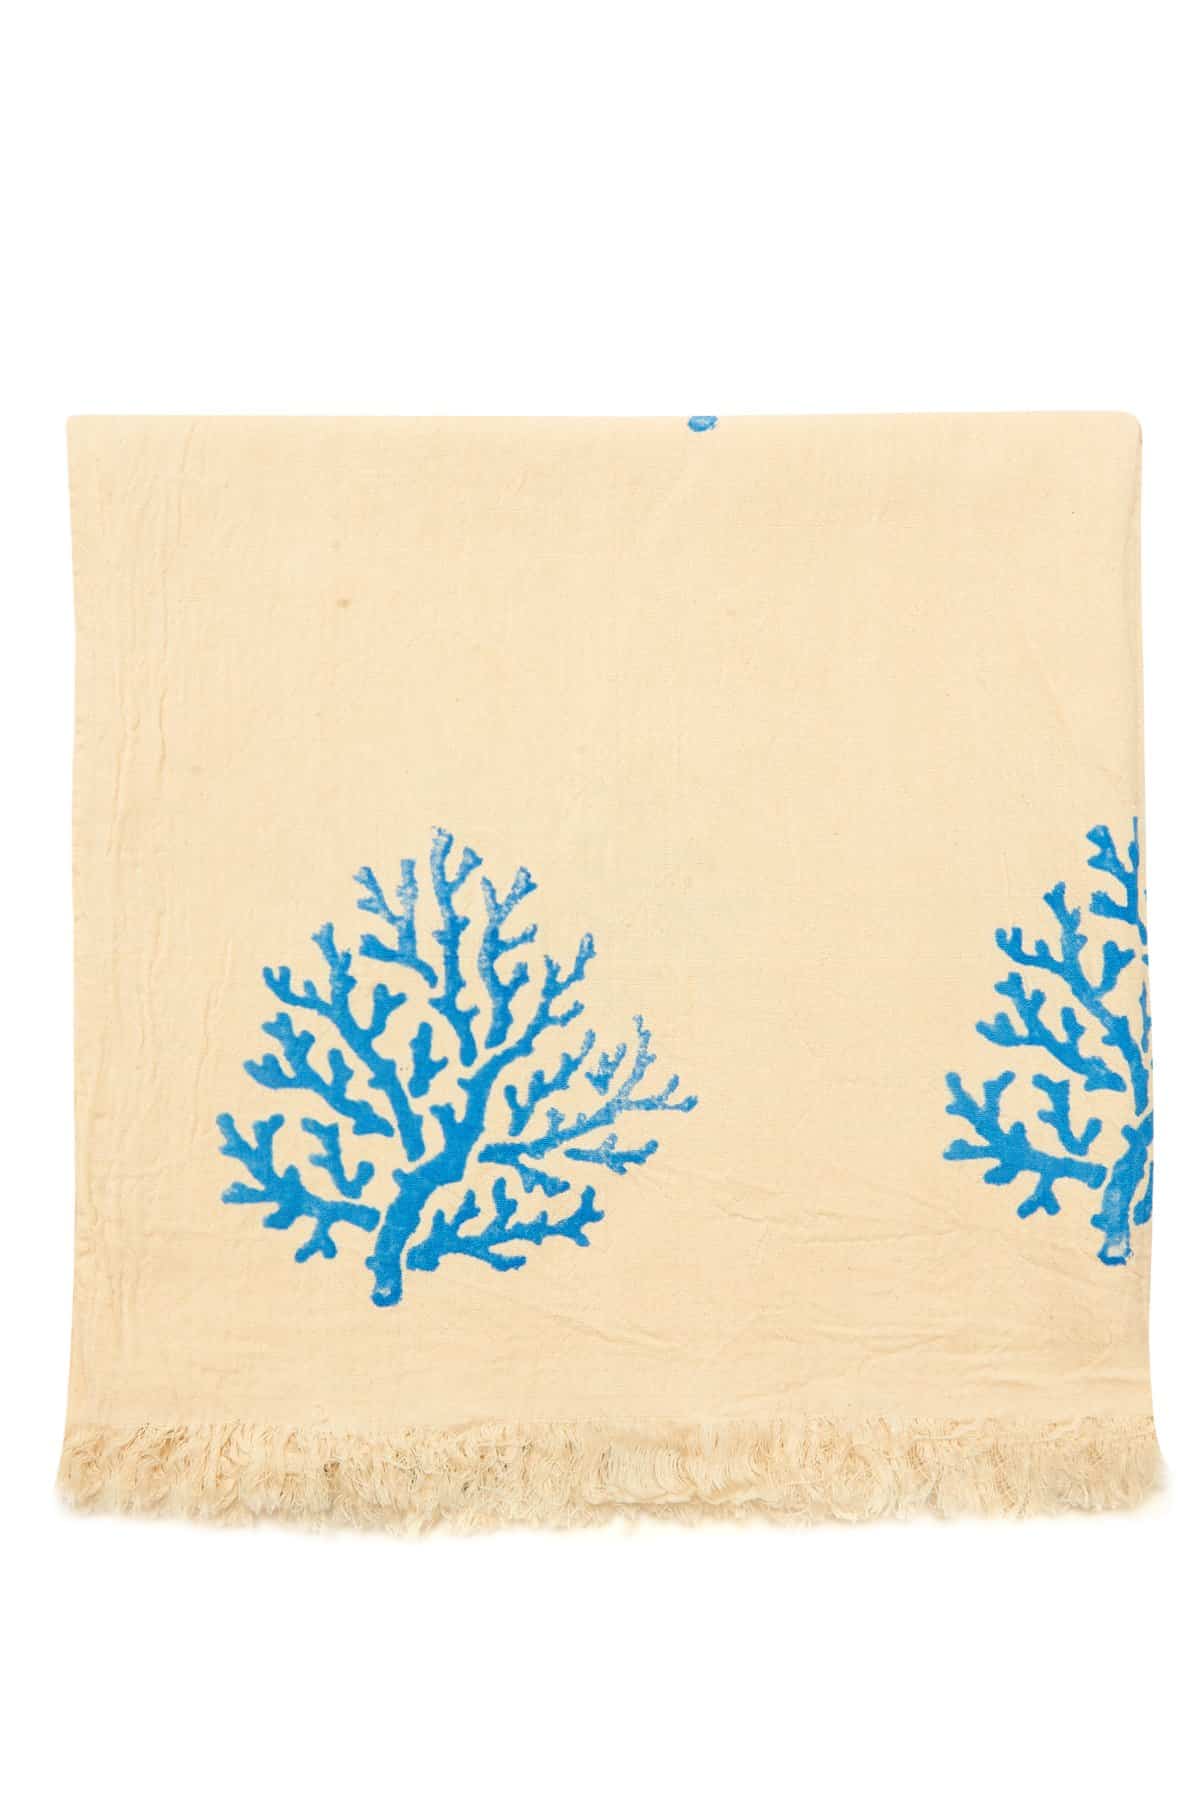 Coral Hand Printed Turkish Towel - Light Blue, 100% Organic Cotton,  Handmade, Bath Towel, Peshtemal, Sauna Towel, Beach Towel - Shop of Turkey  - Buy